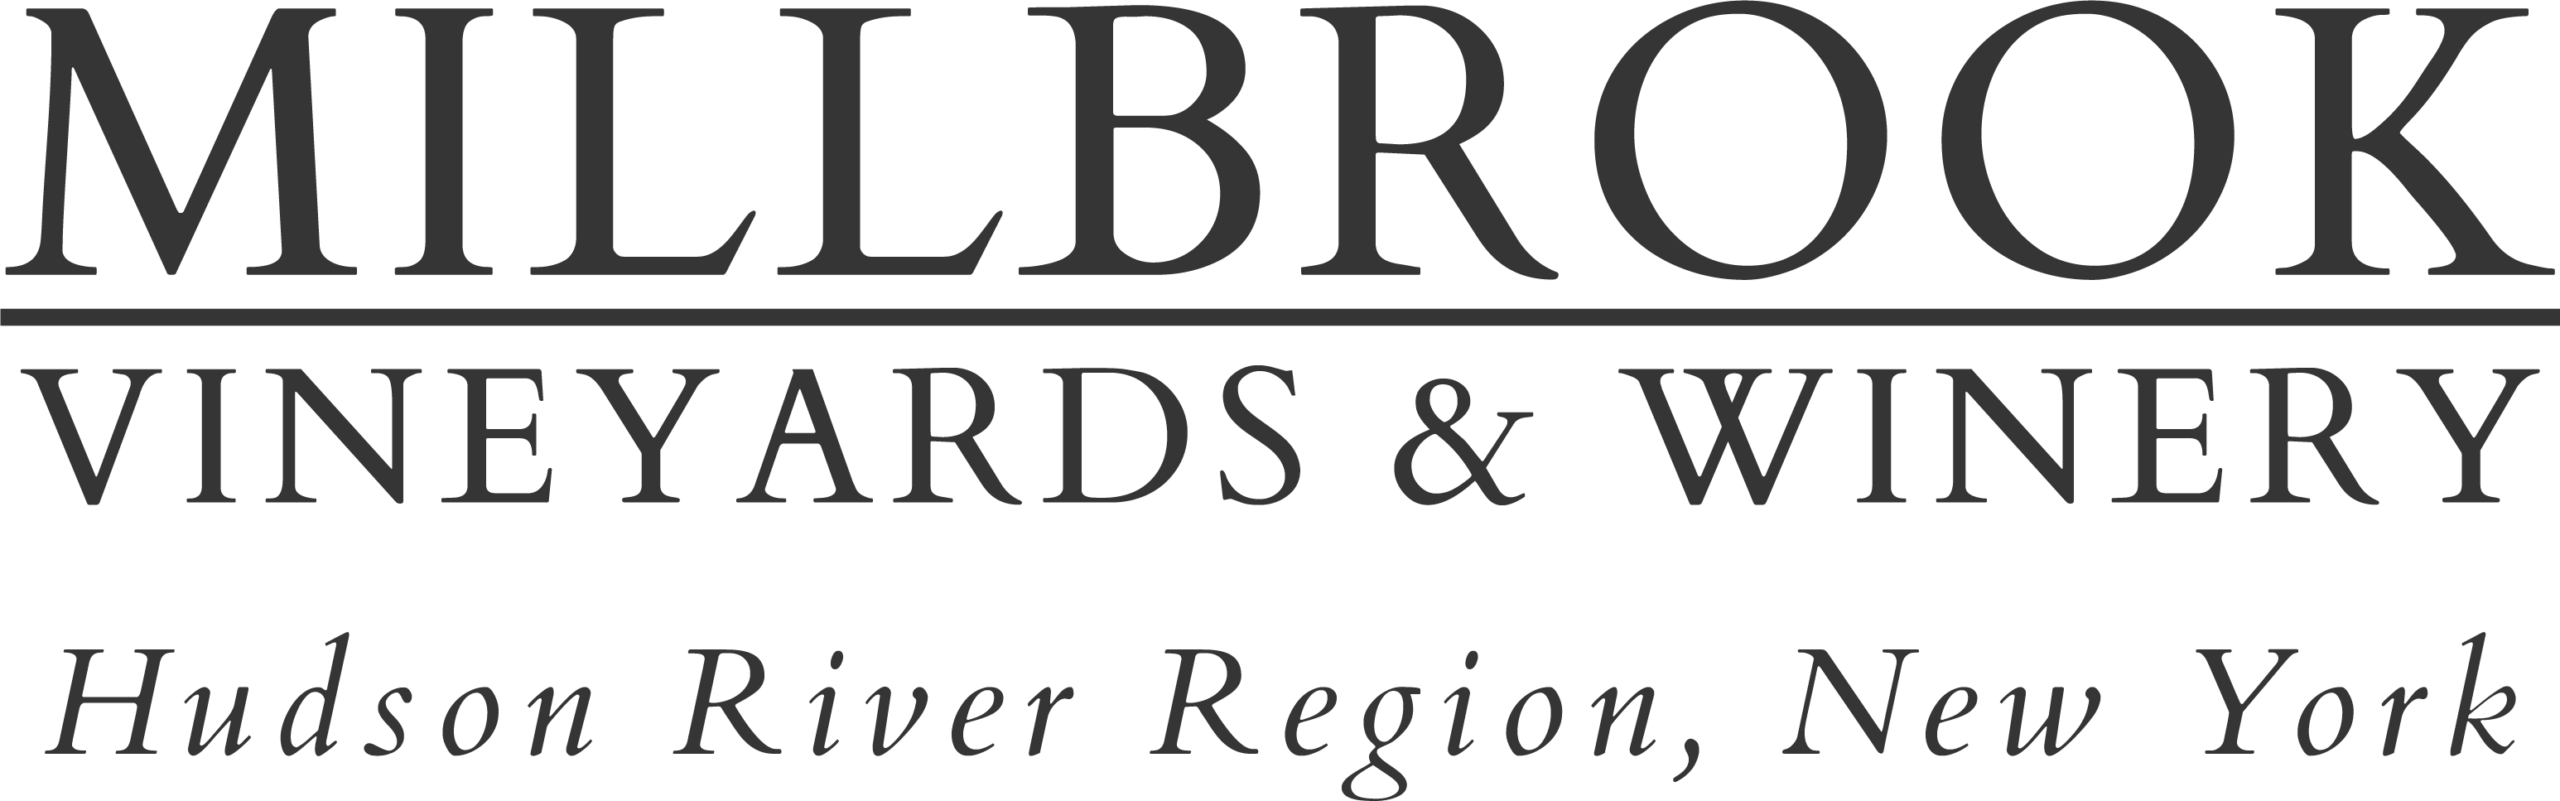 Millbrook Vineyard and Winery logo